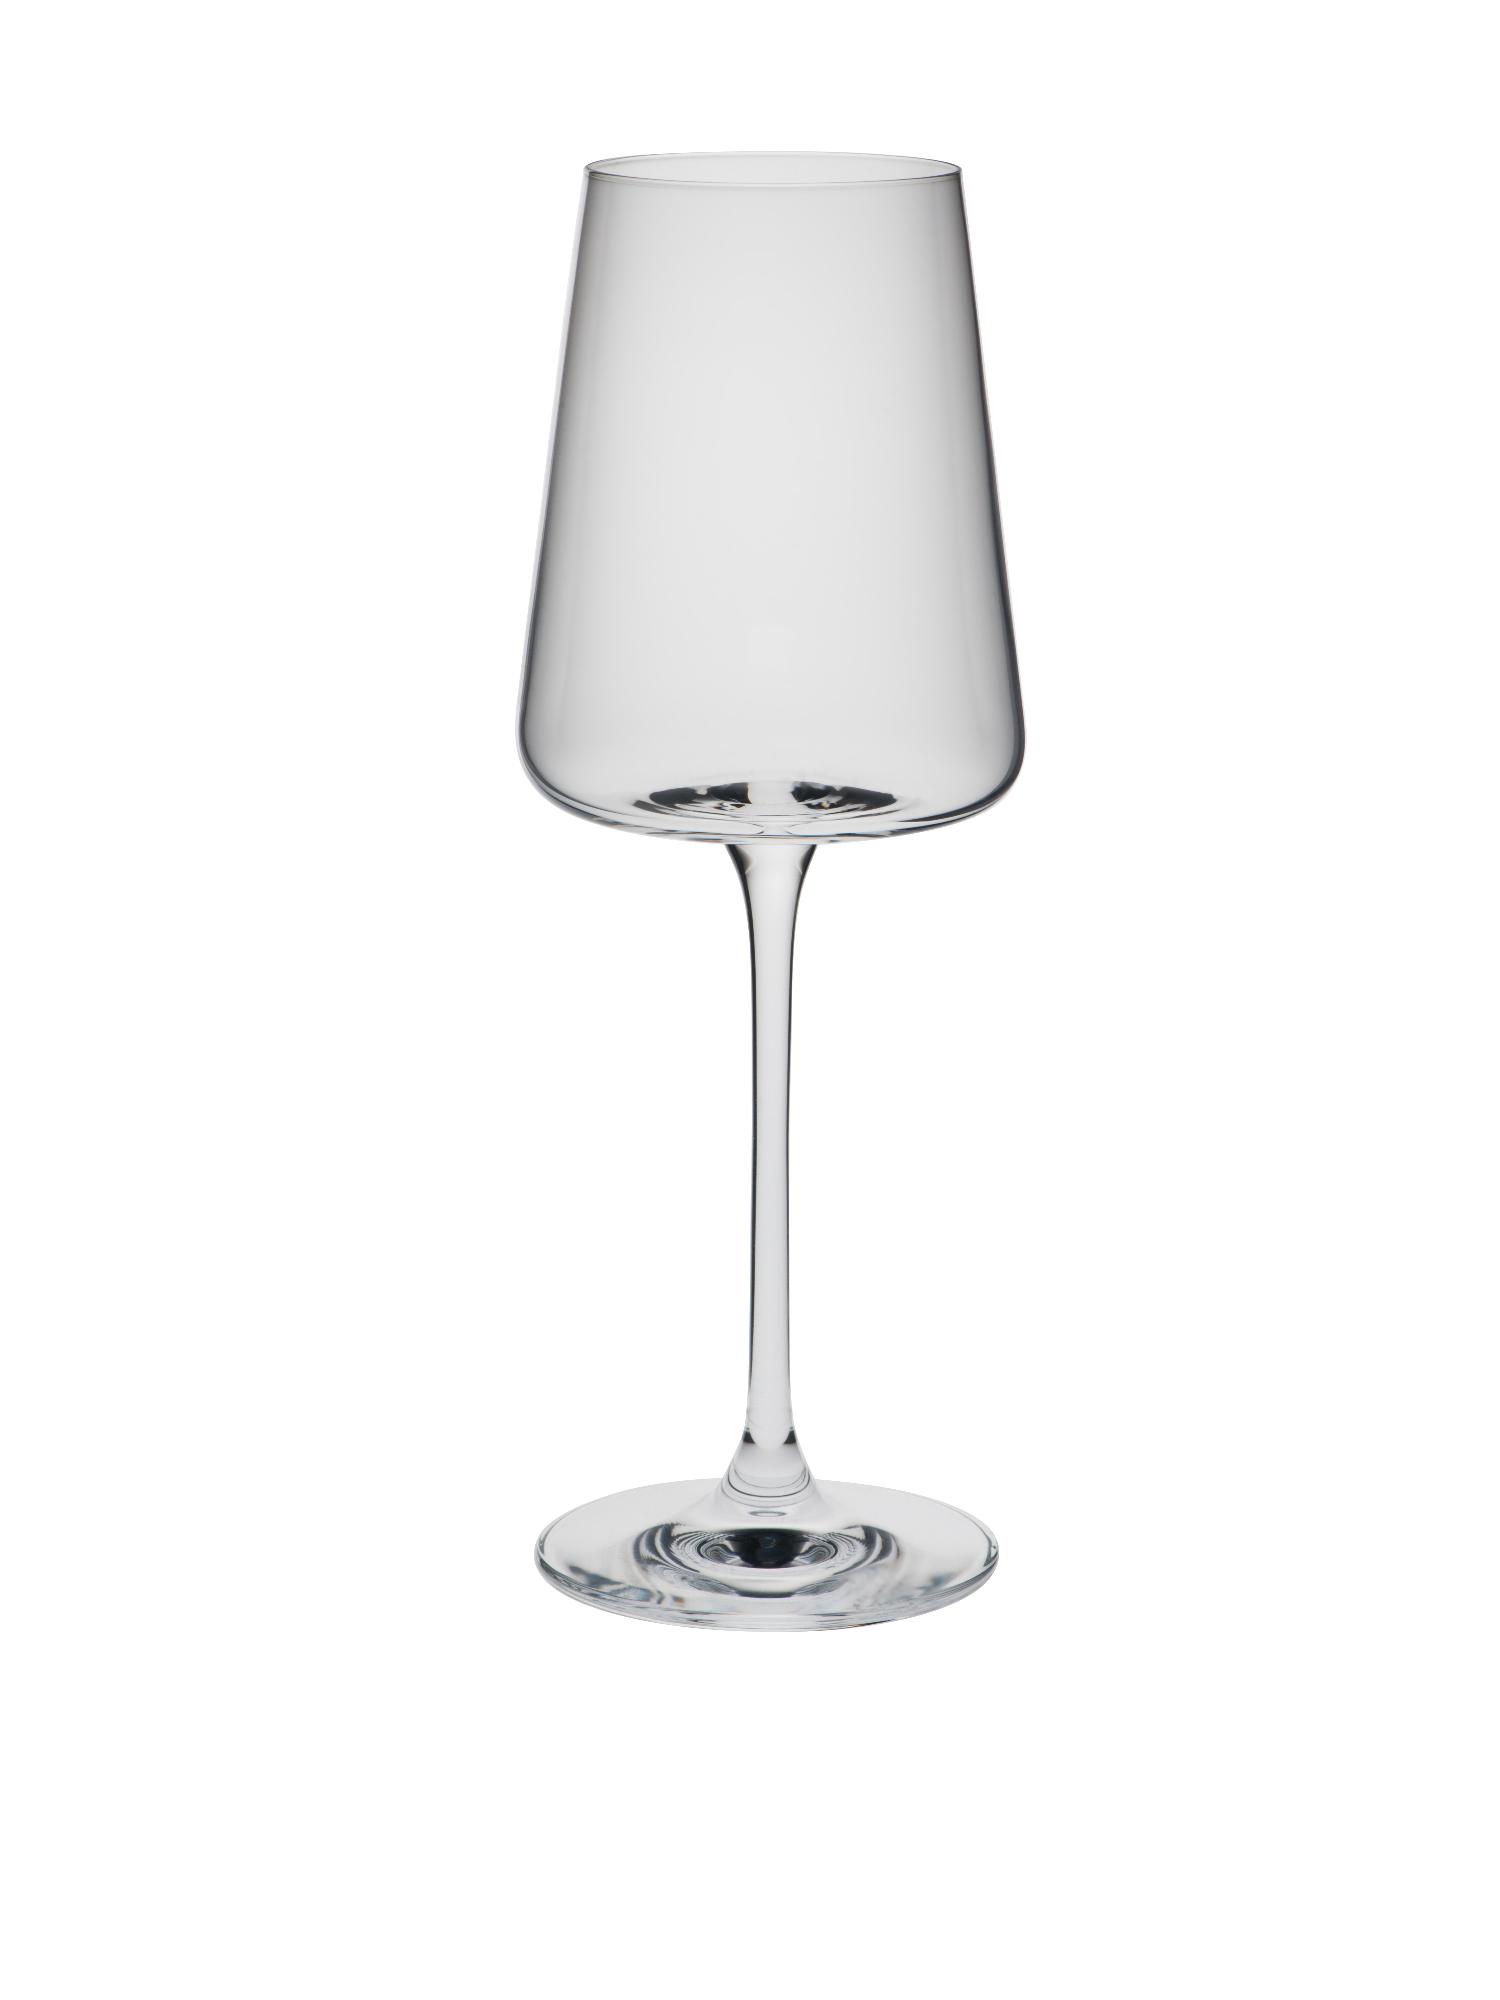 Mode wine glass, 360ml